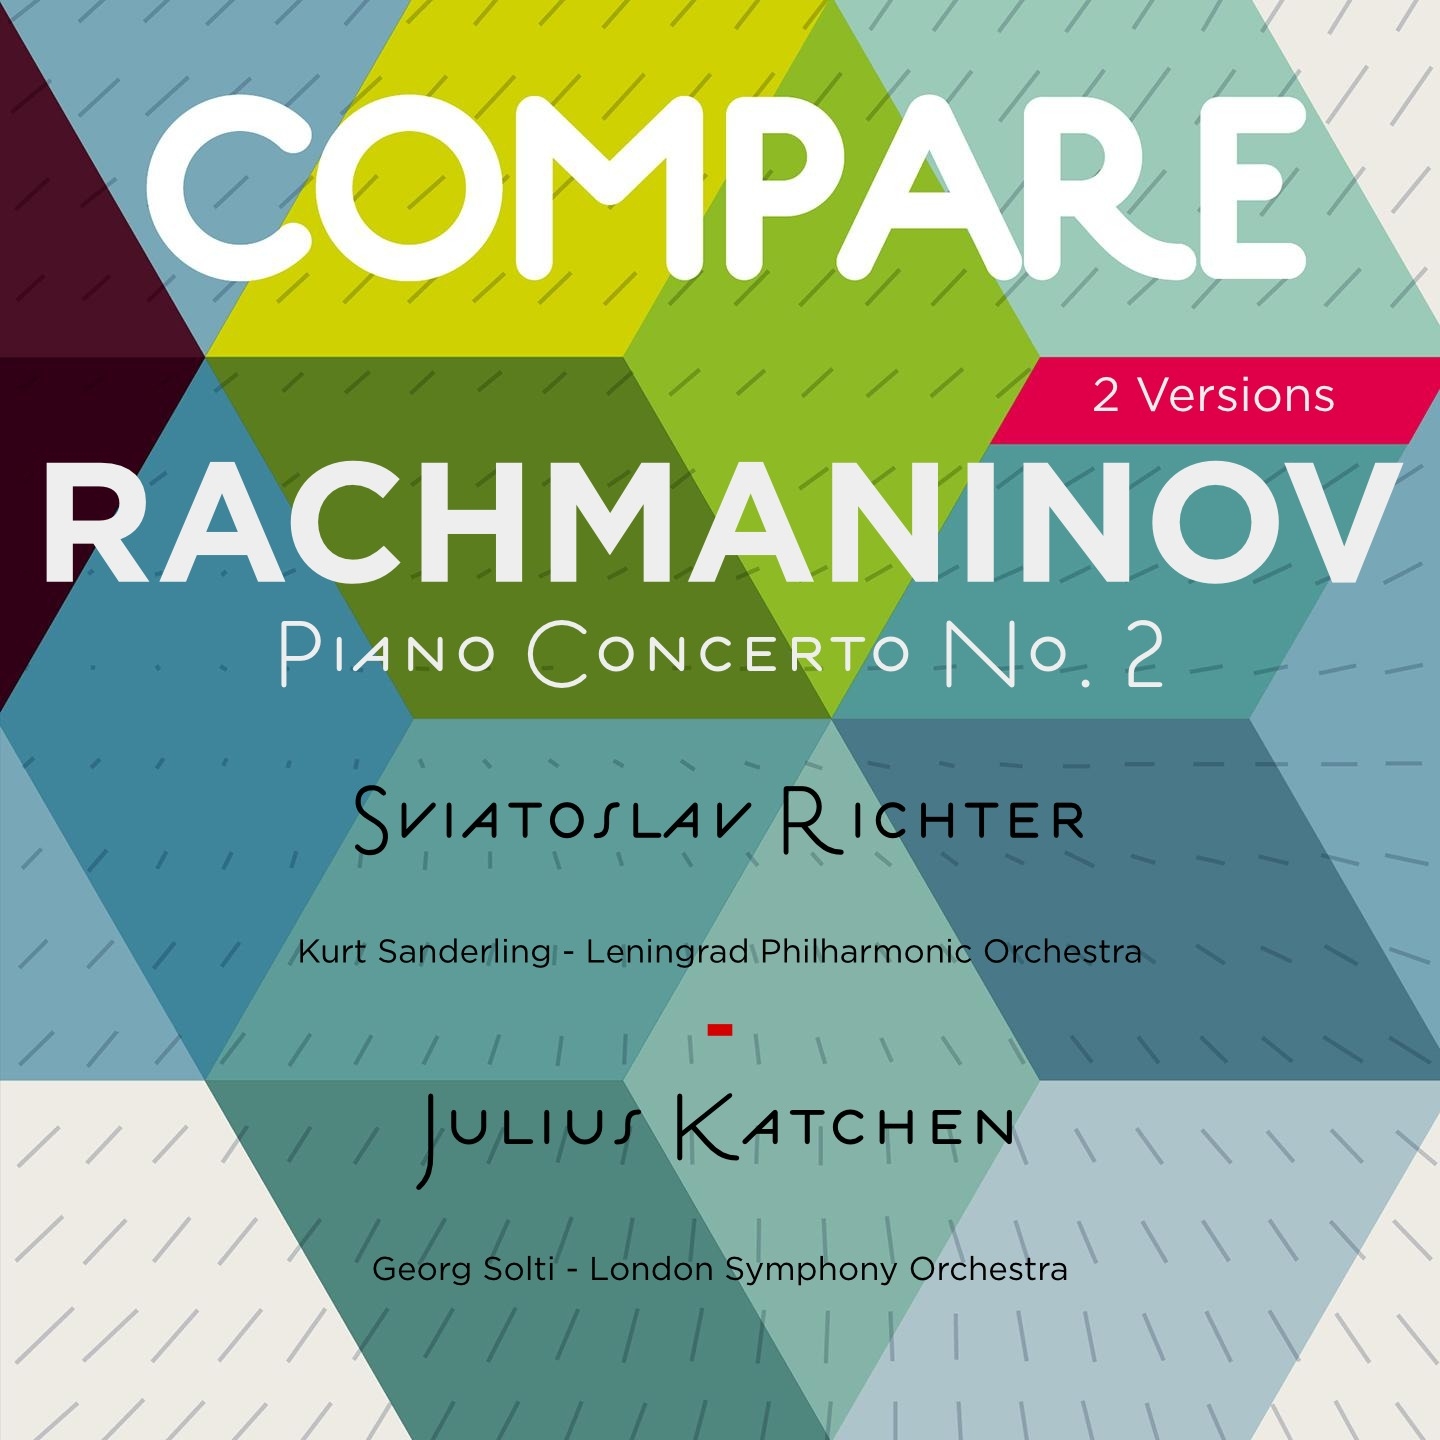 Rachmaninoff: Piano Concerto No. 2, Sviatoslav Richter vs. Julius Katchen